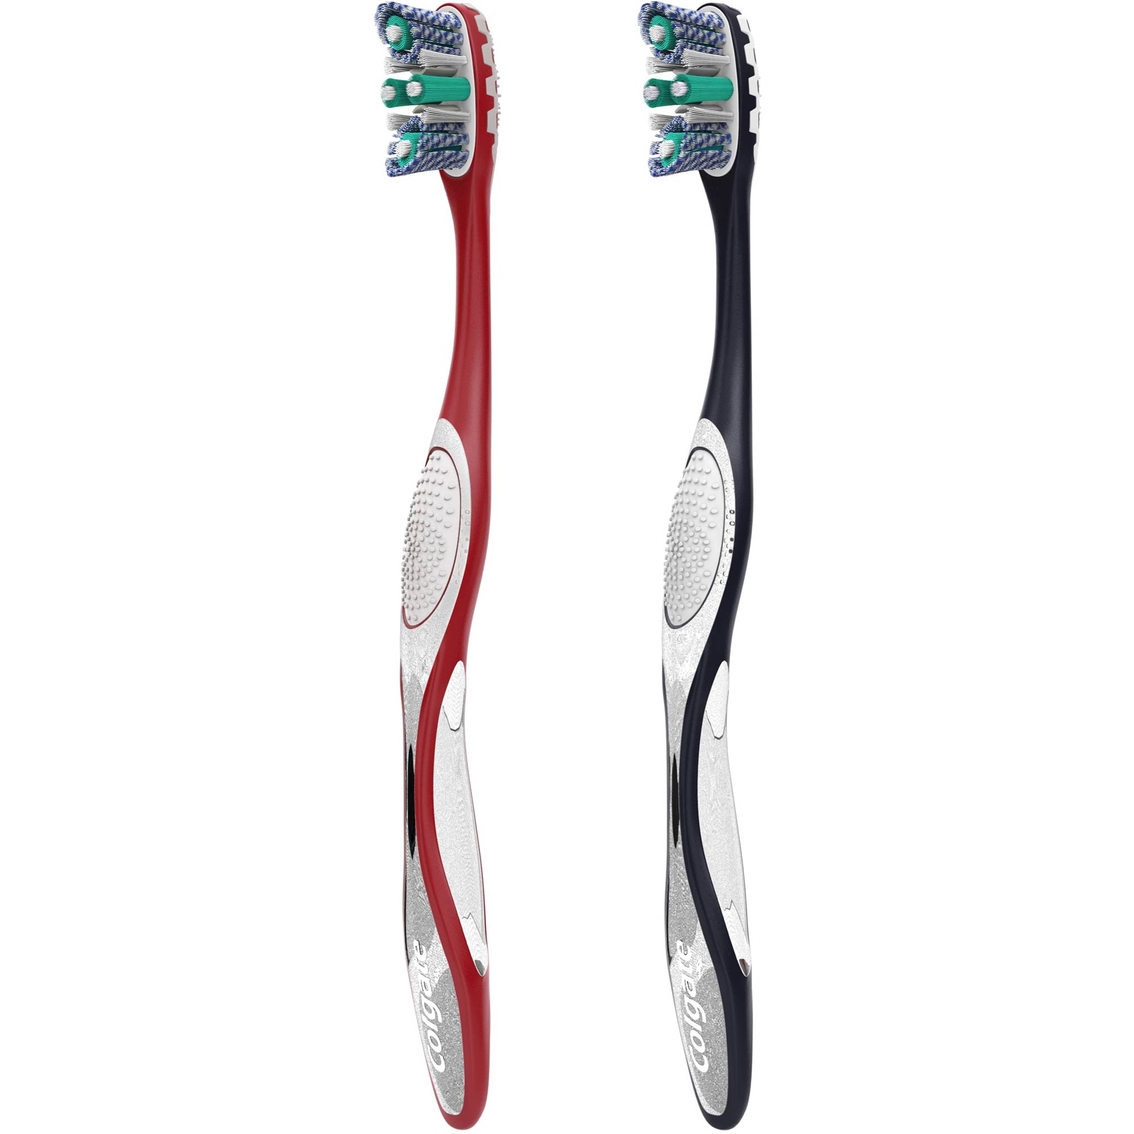 Colgate 360 Advanced Optic White Toothbrush 2 pk. - Image 3 of 3